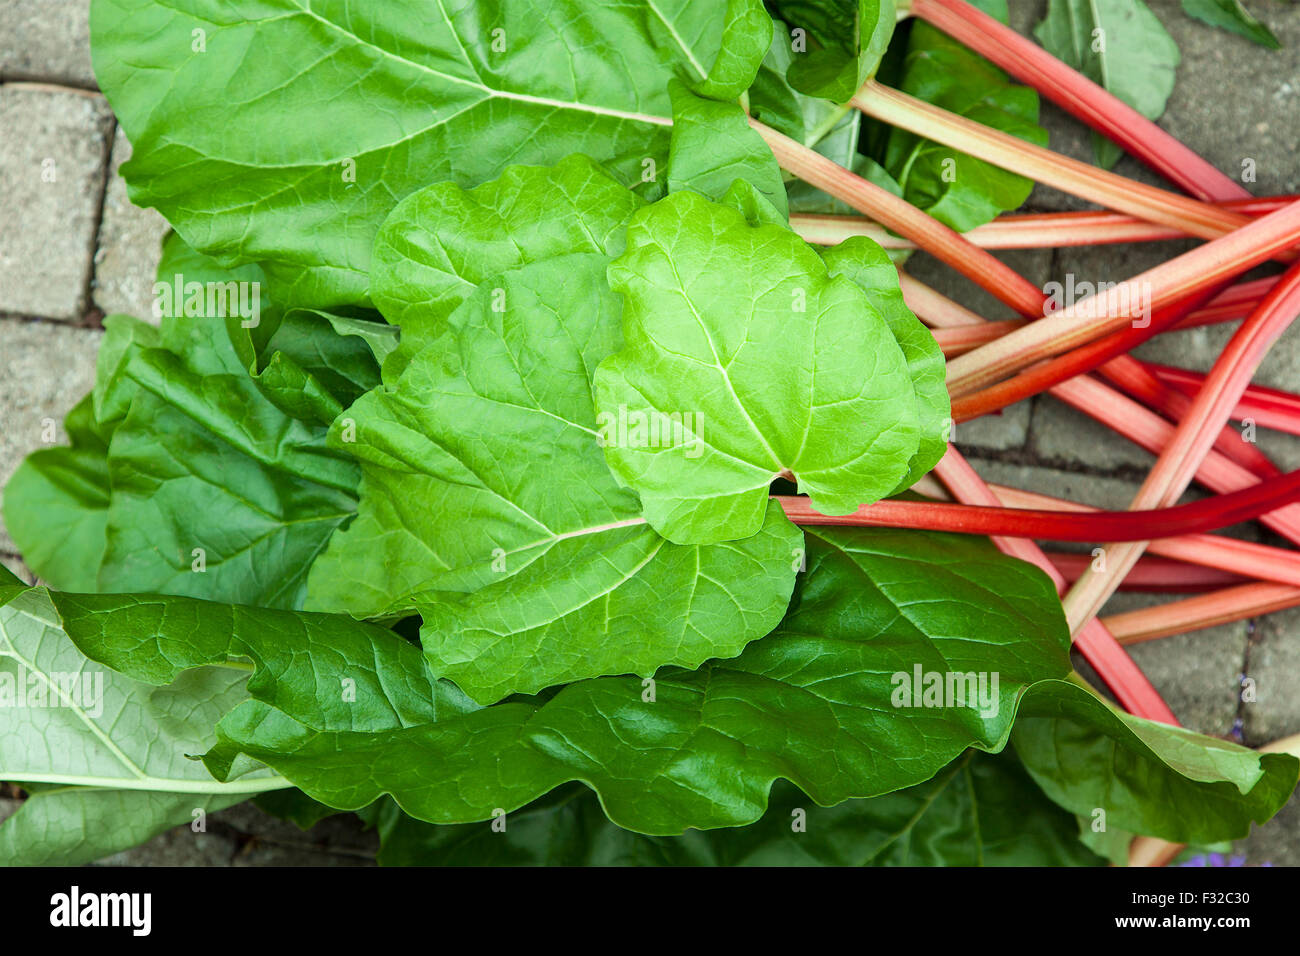 Image of freshly cut stems of rhubarb. Stock Photo